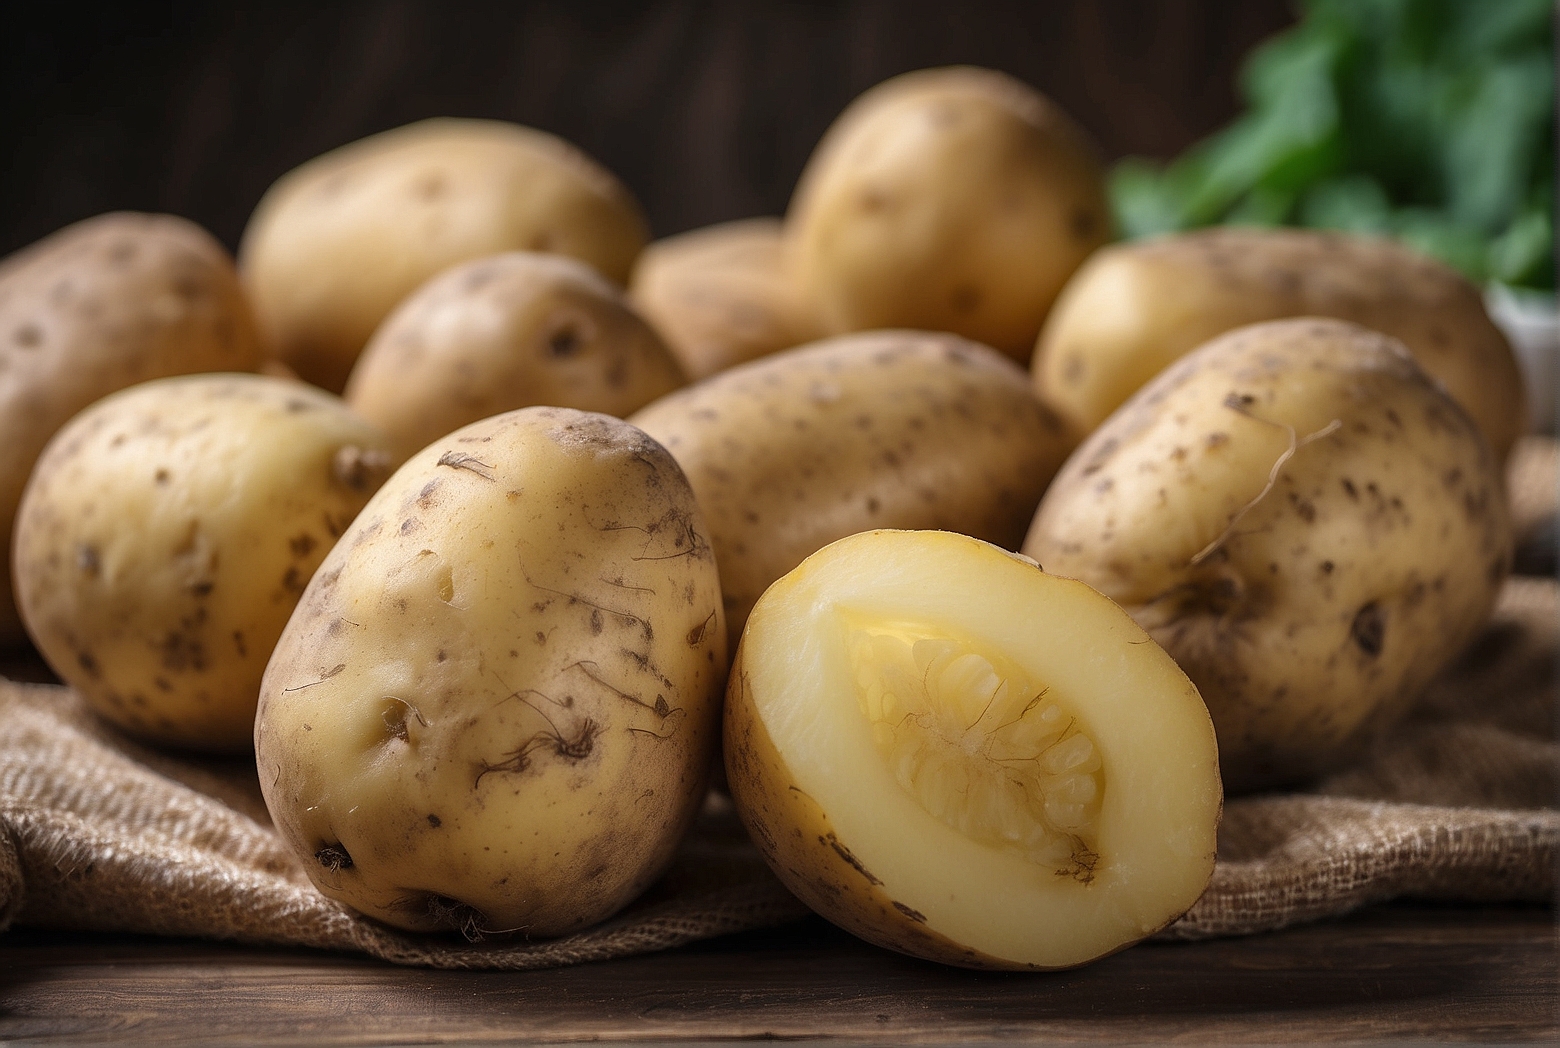 Default Are russet potatoes GMO 2